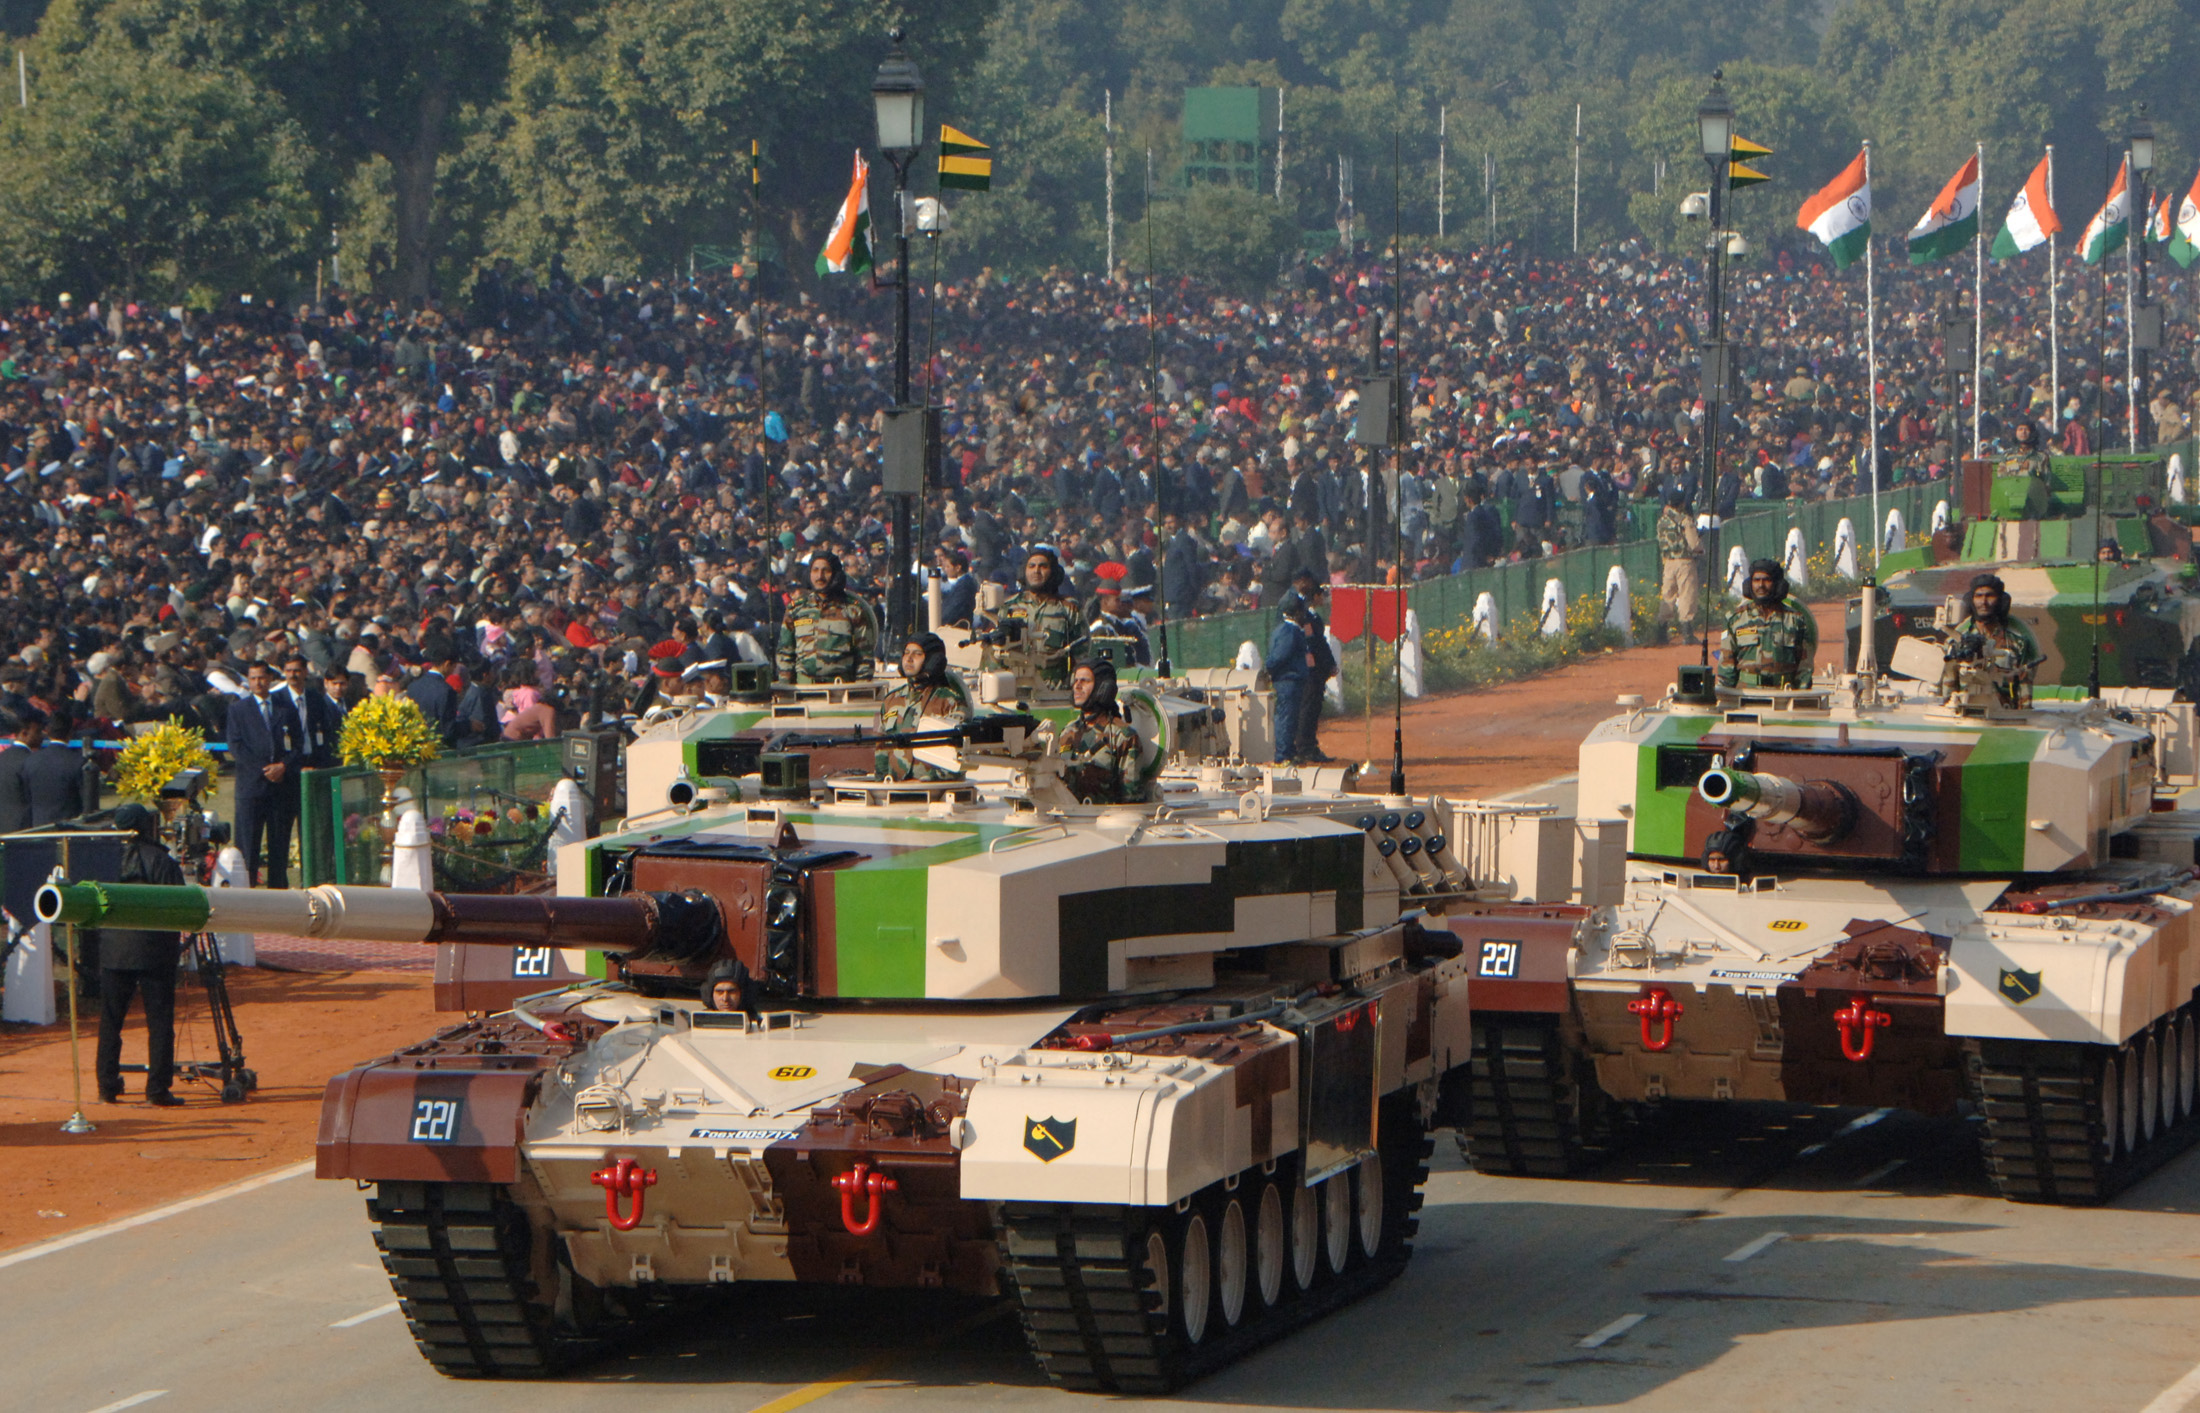 http://lh6.ggpht.com/-nrqMHZwd464/UQPO-FmWlgI/AAAAAAAAIEY/TY6zJwHVJ2w/s0/Arjun-Main-Battle-Tank-MBT-Indian-Army-IA.jpg